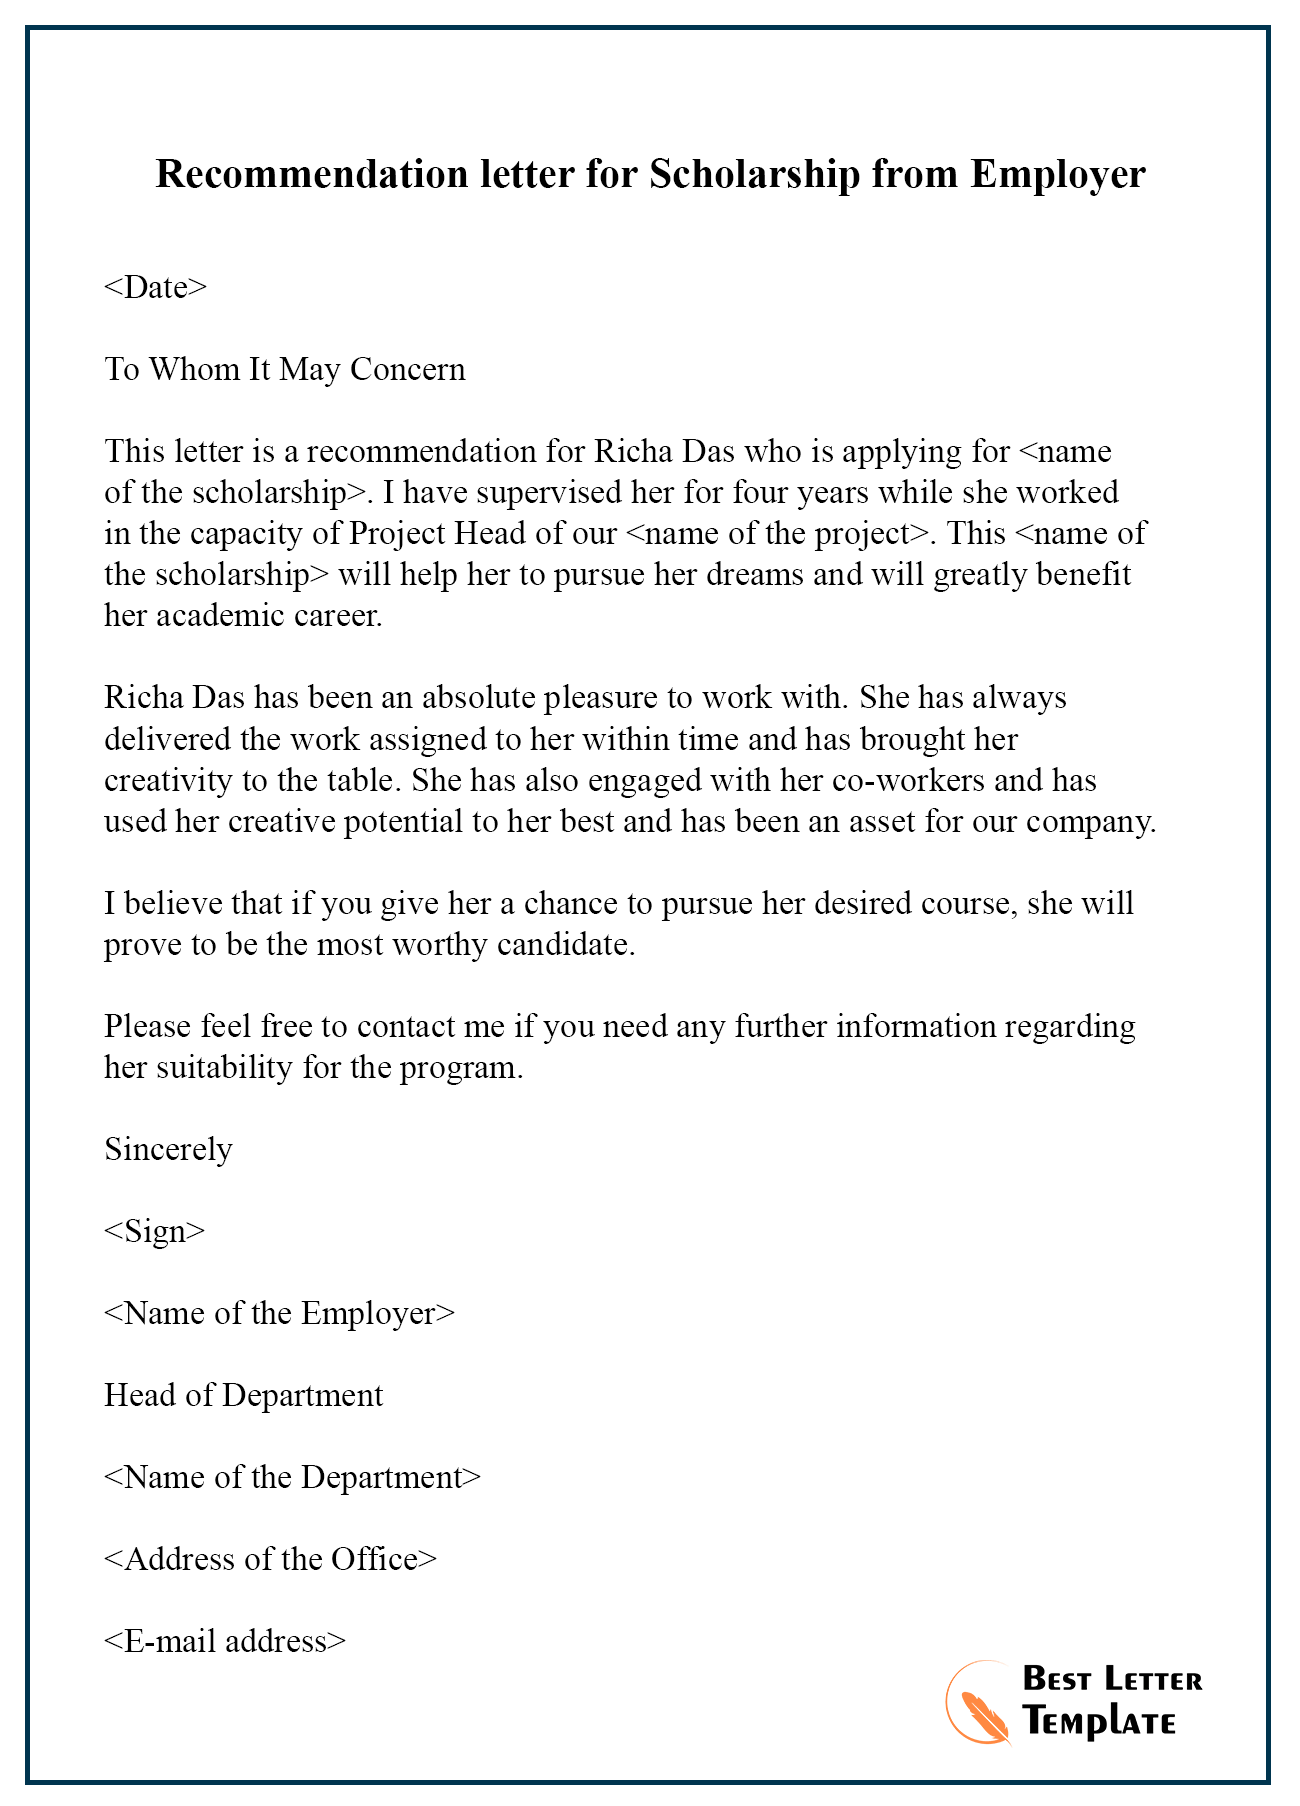 Recommendation letter for Scholarship from Employer Best Letter Template